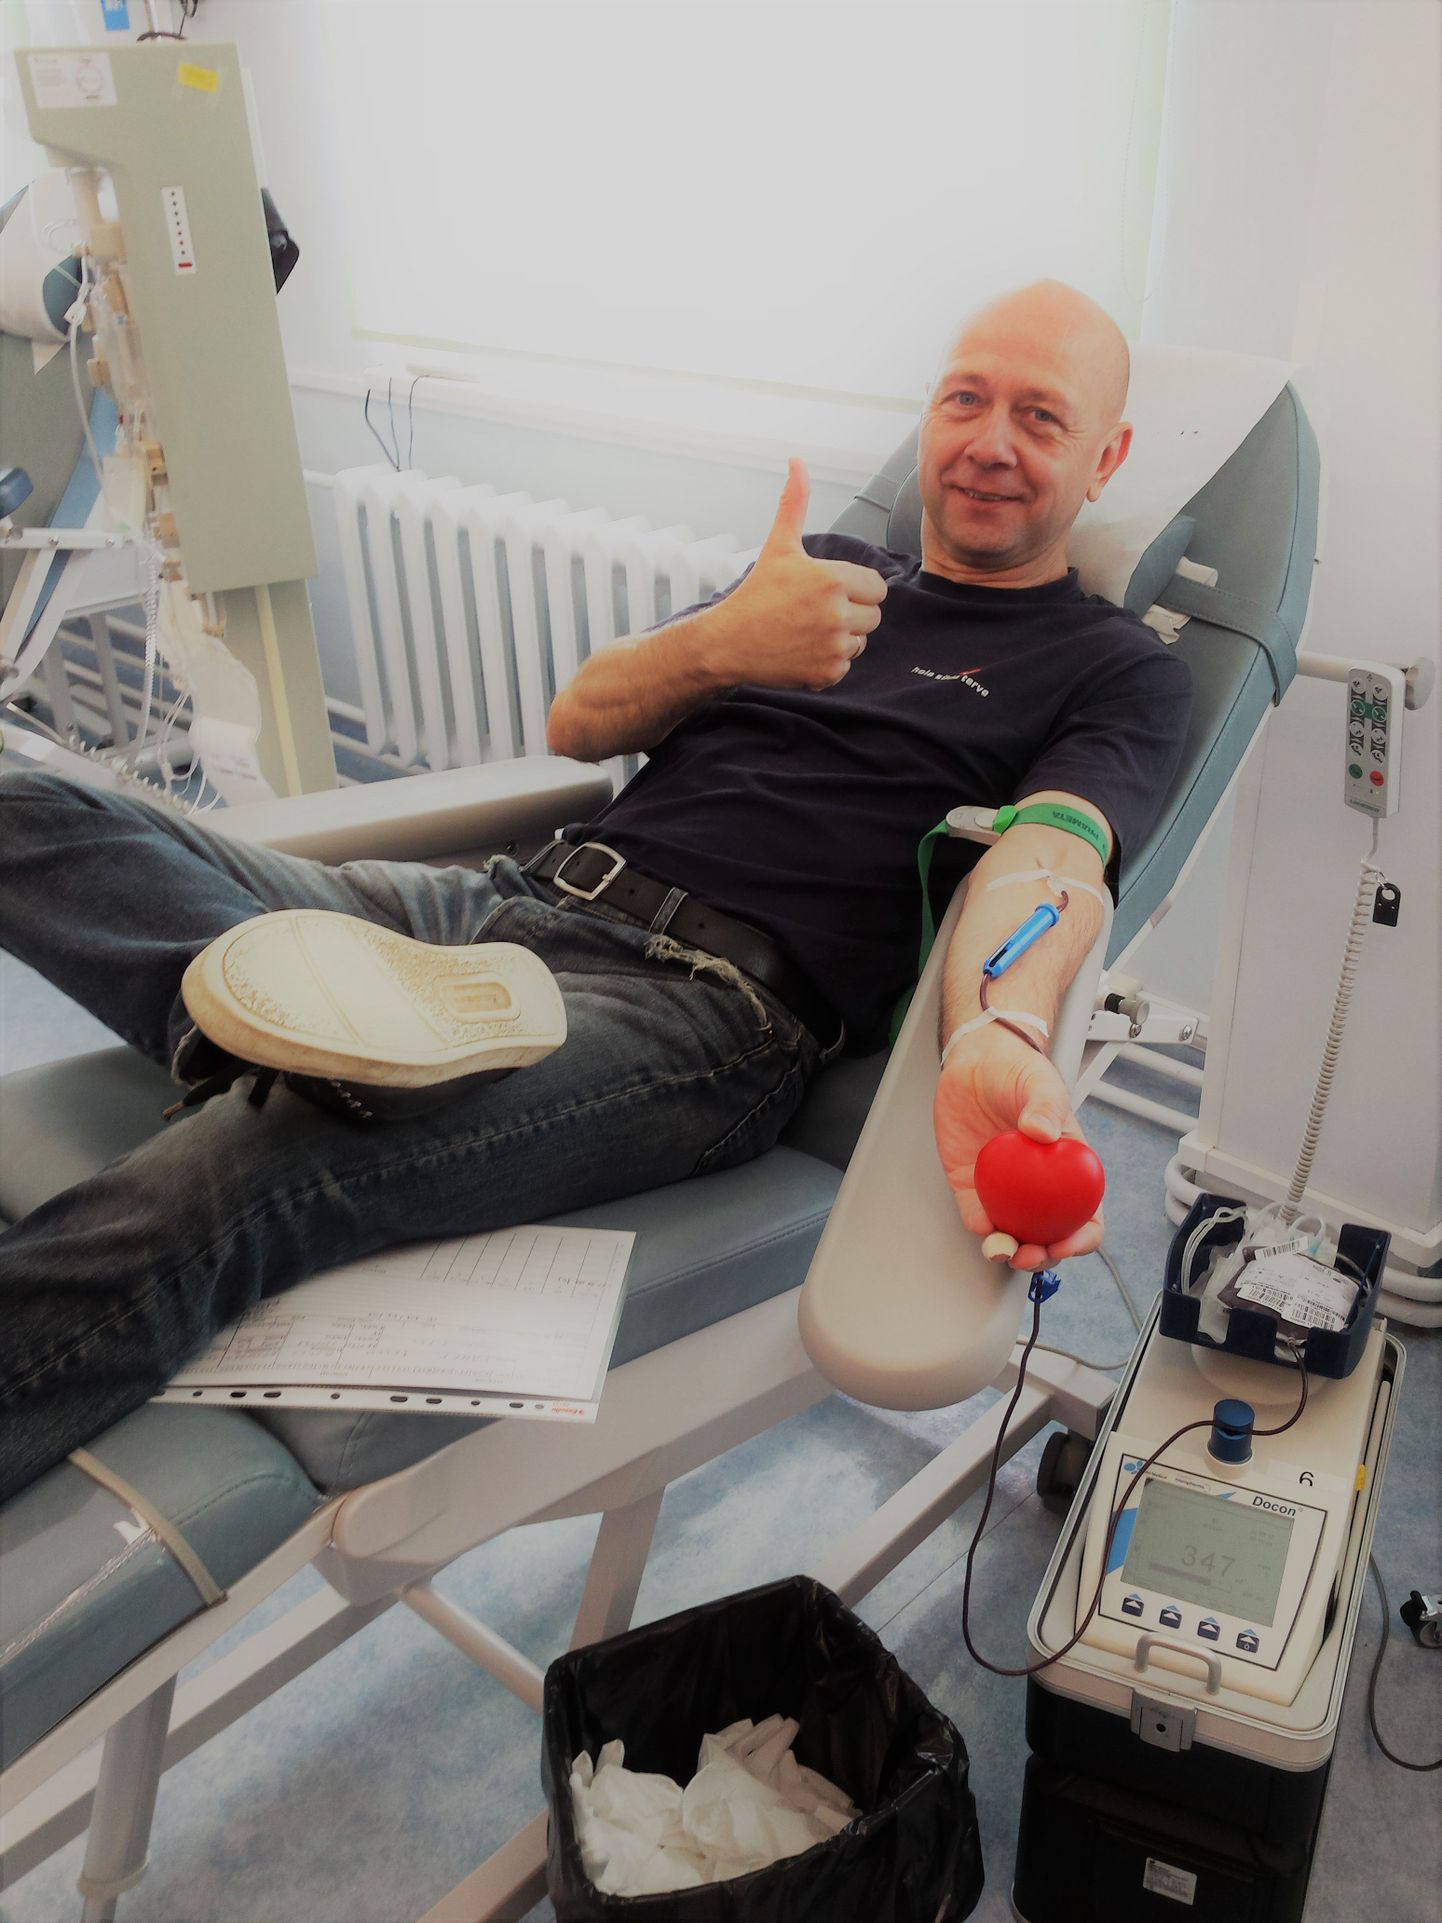 0-negatiivse veregrupiga Vello Vaher käis täna esimest korda elus doonorina head tegemas.